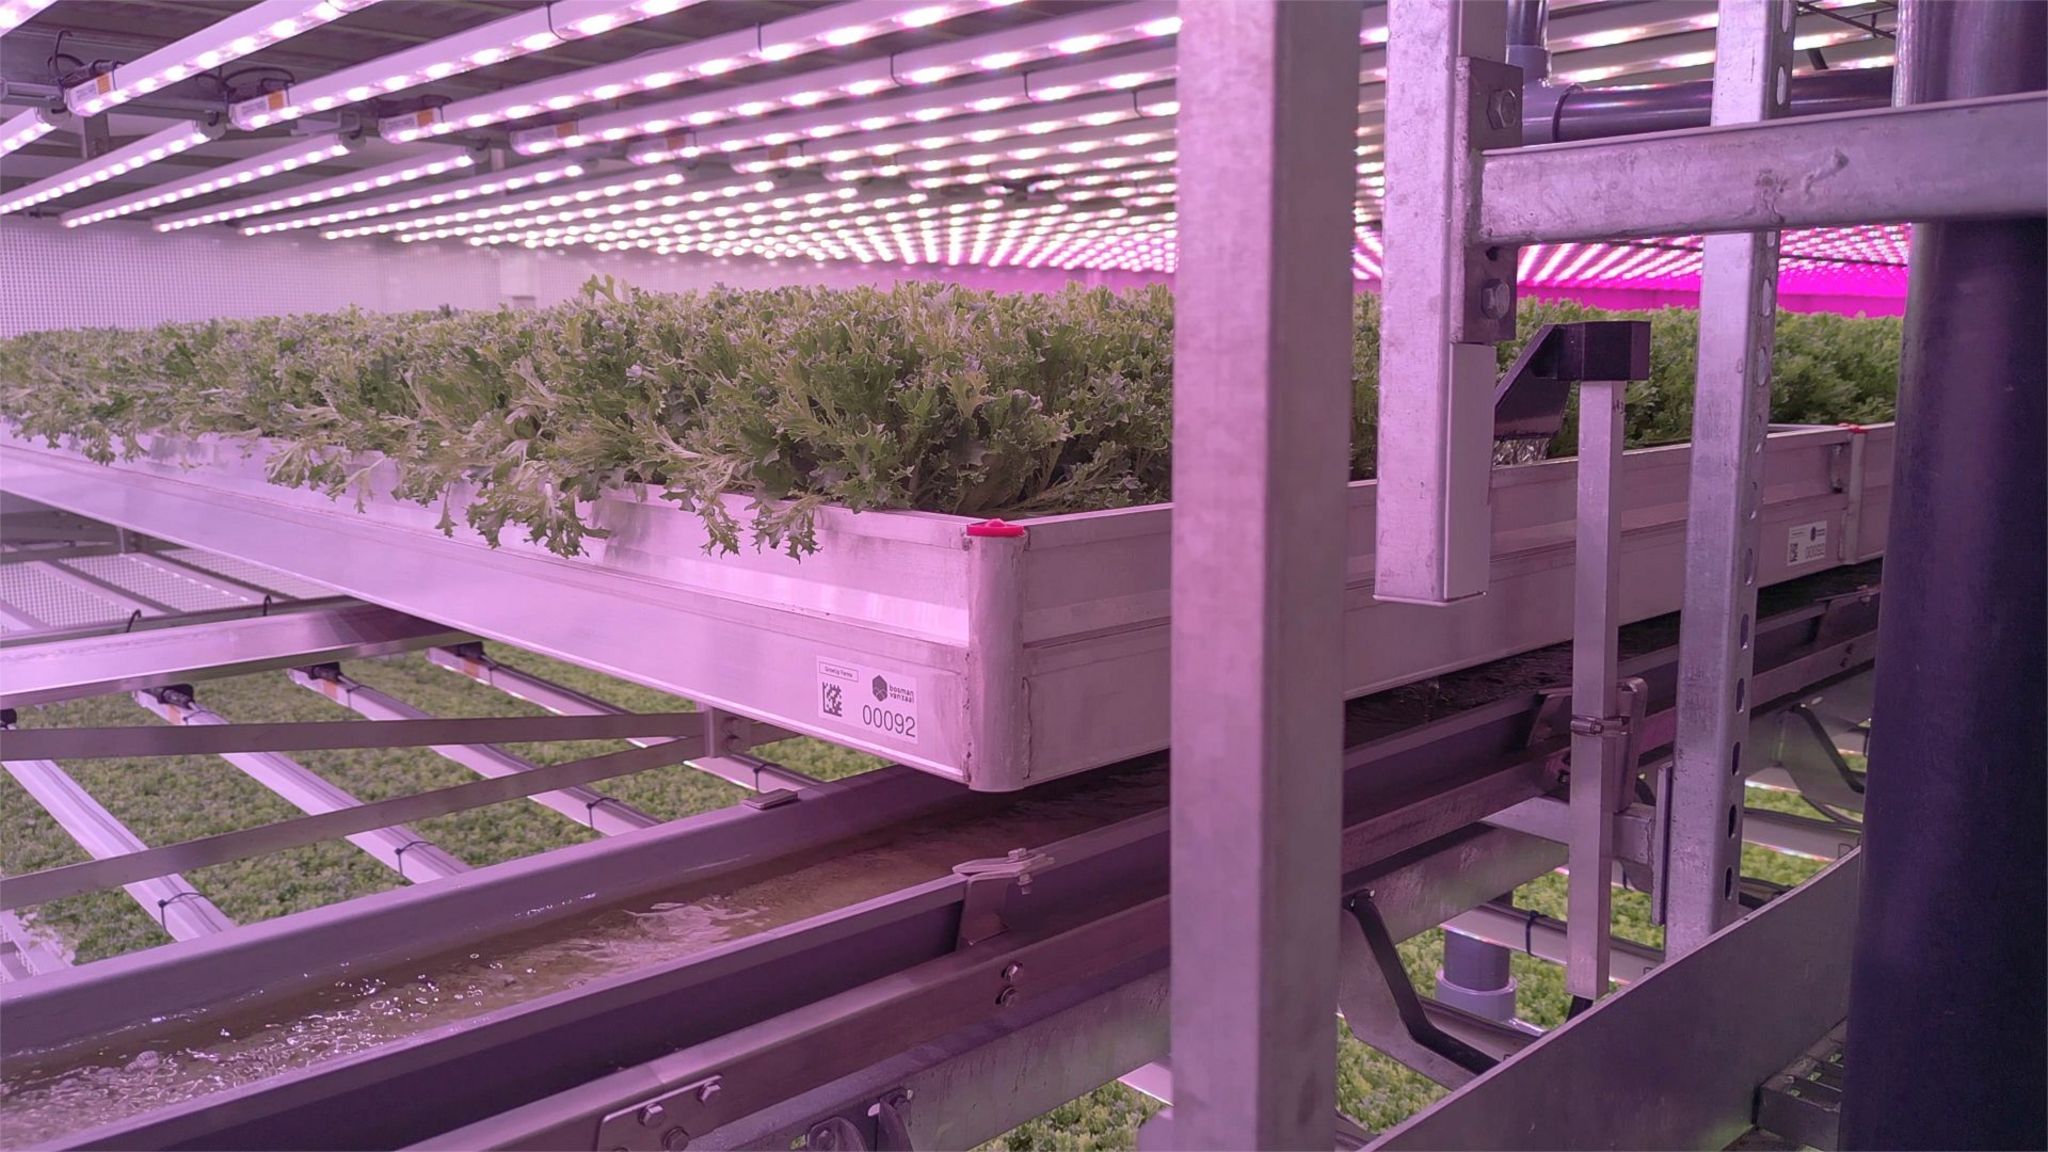 Salad crops in a vertical farm 